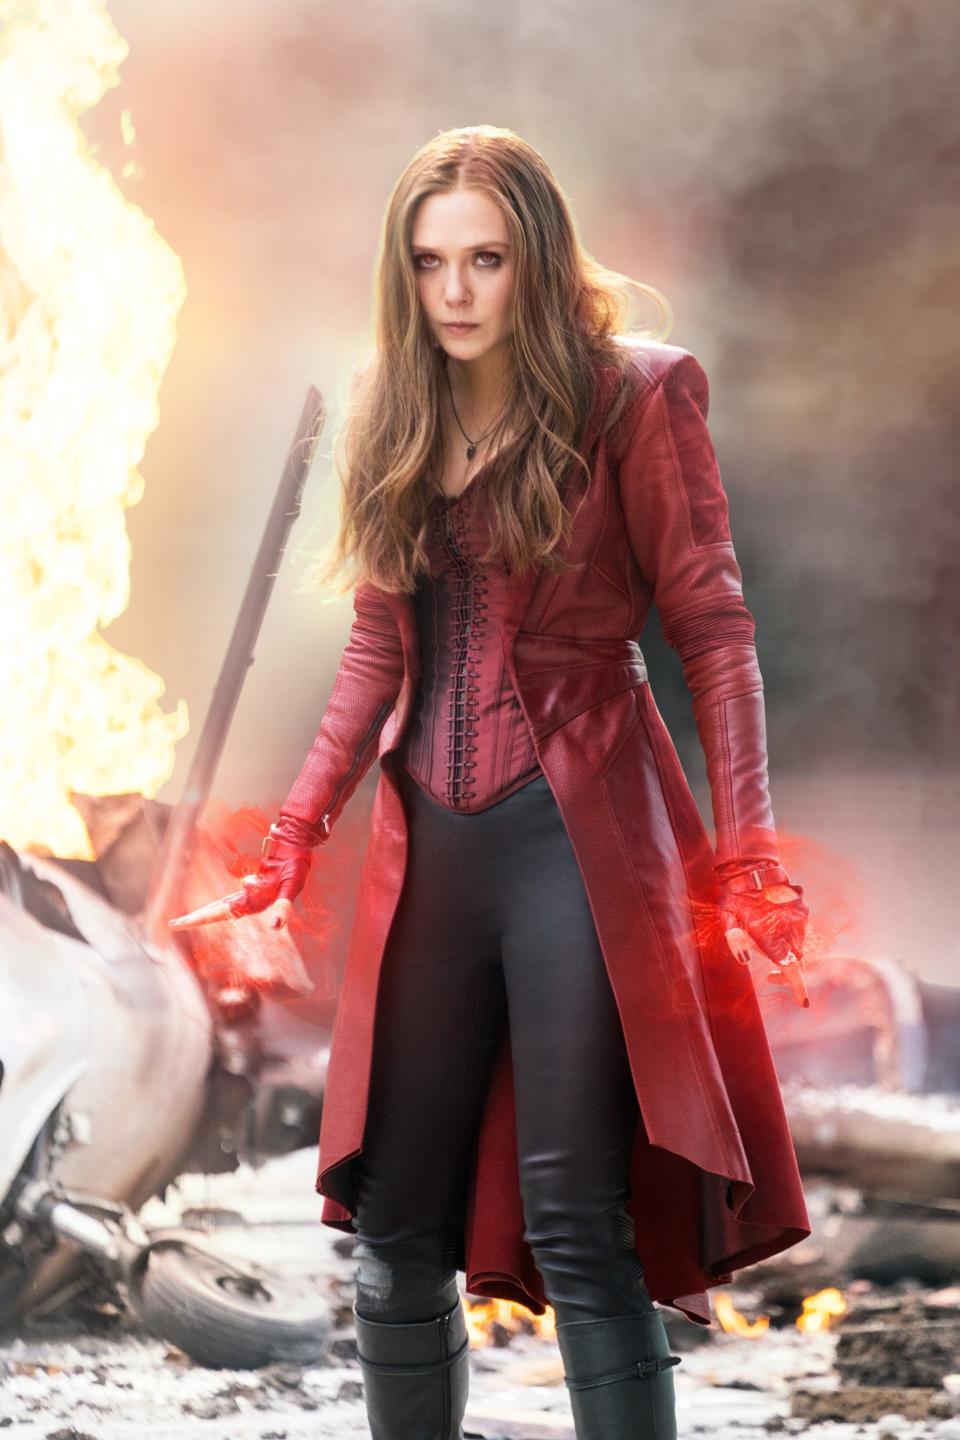 As Scarlet Witch, Wanda Maximoff (Elizabeth Olsen) showed off her powers in "Captain America: Civil War."